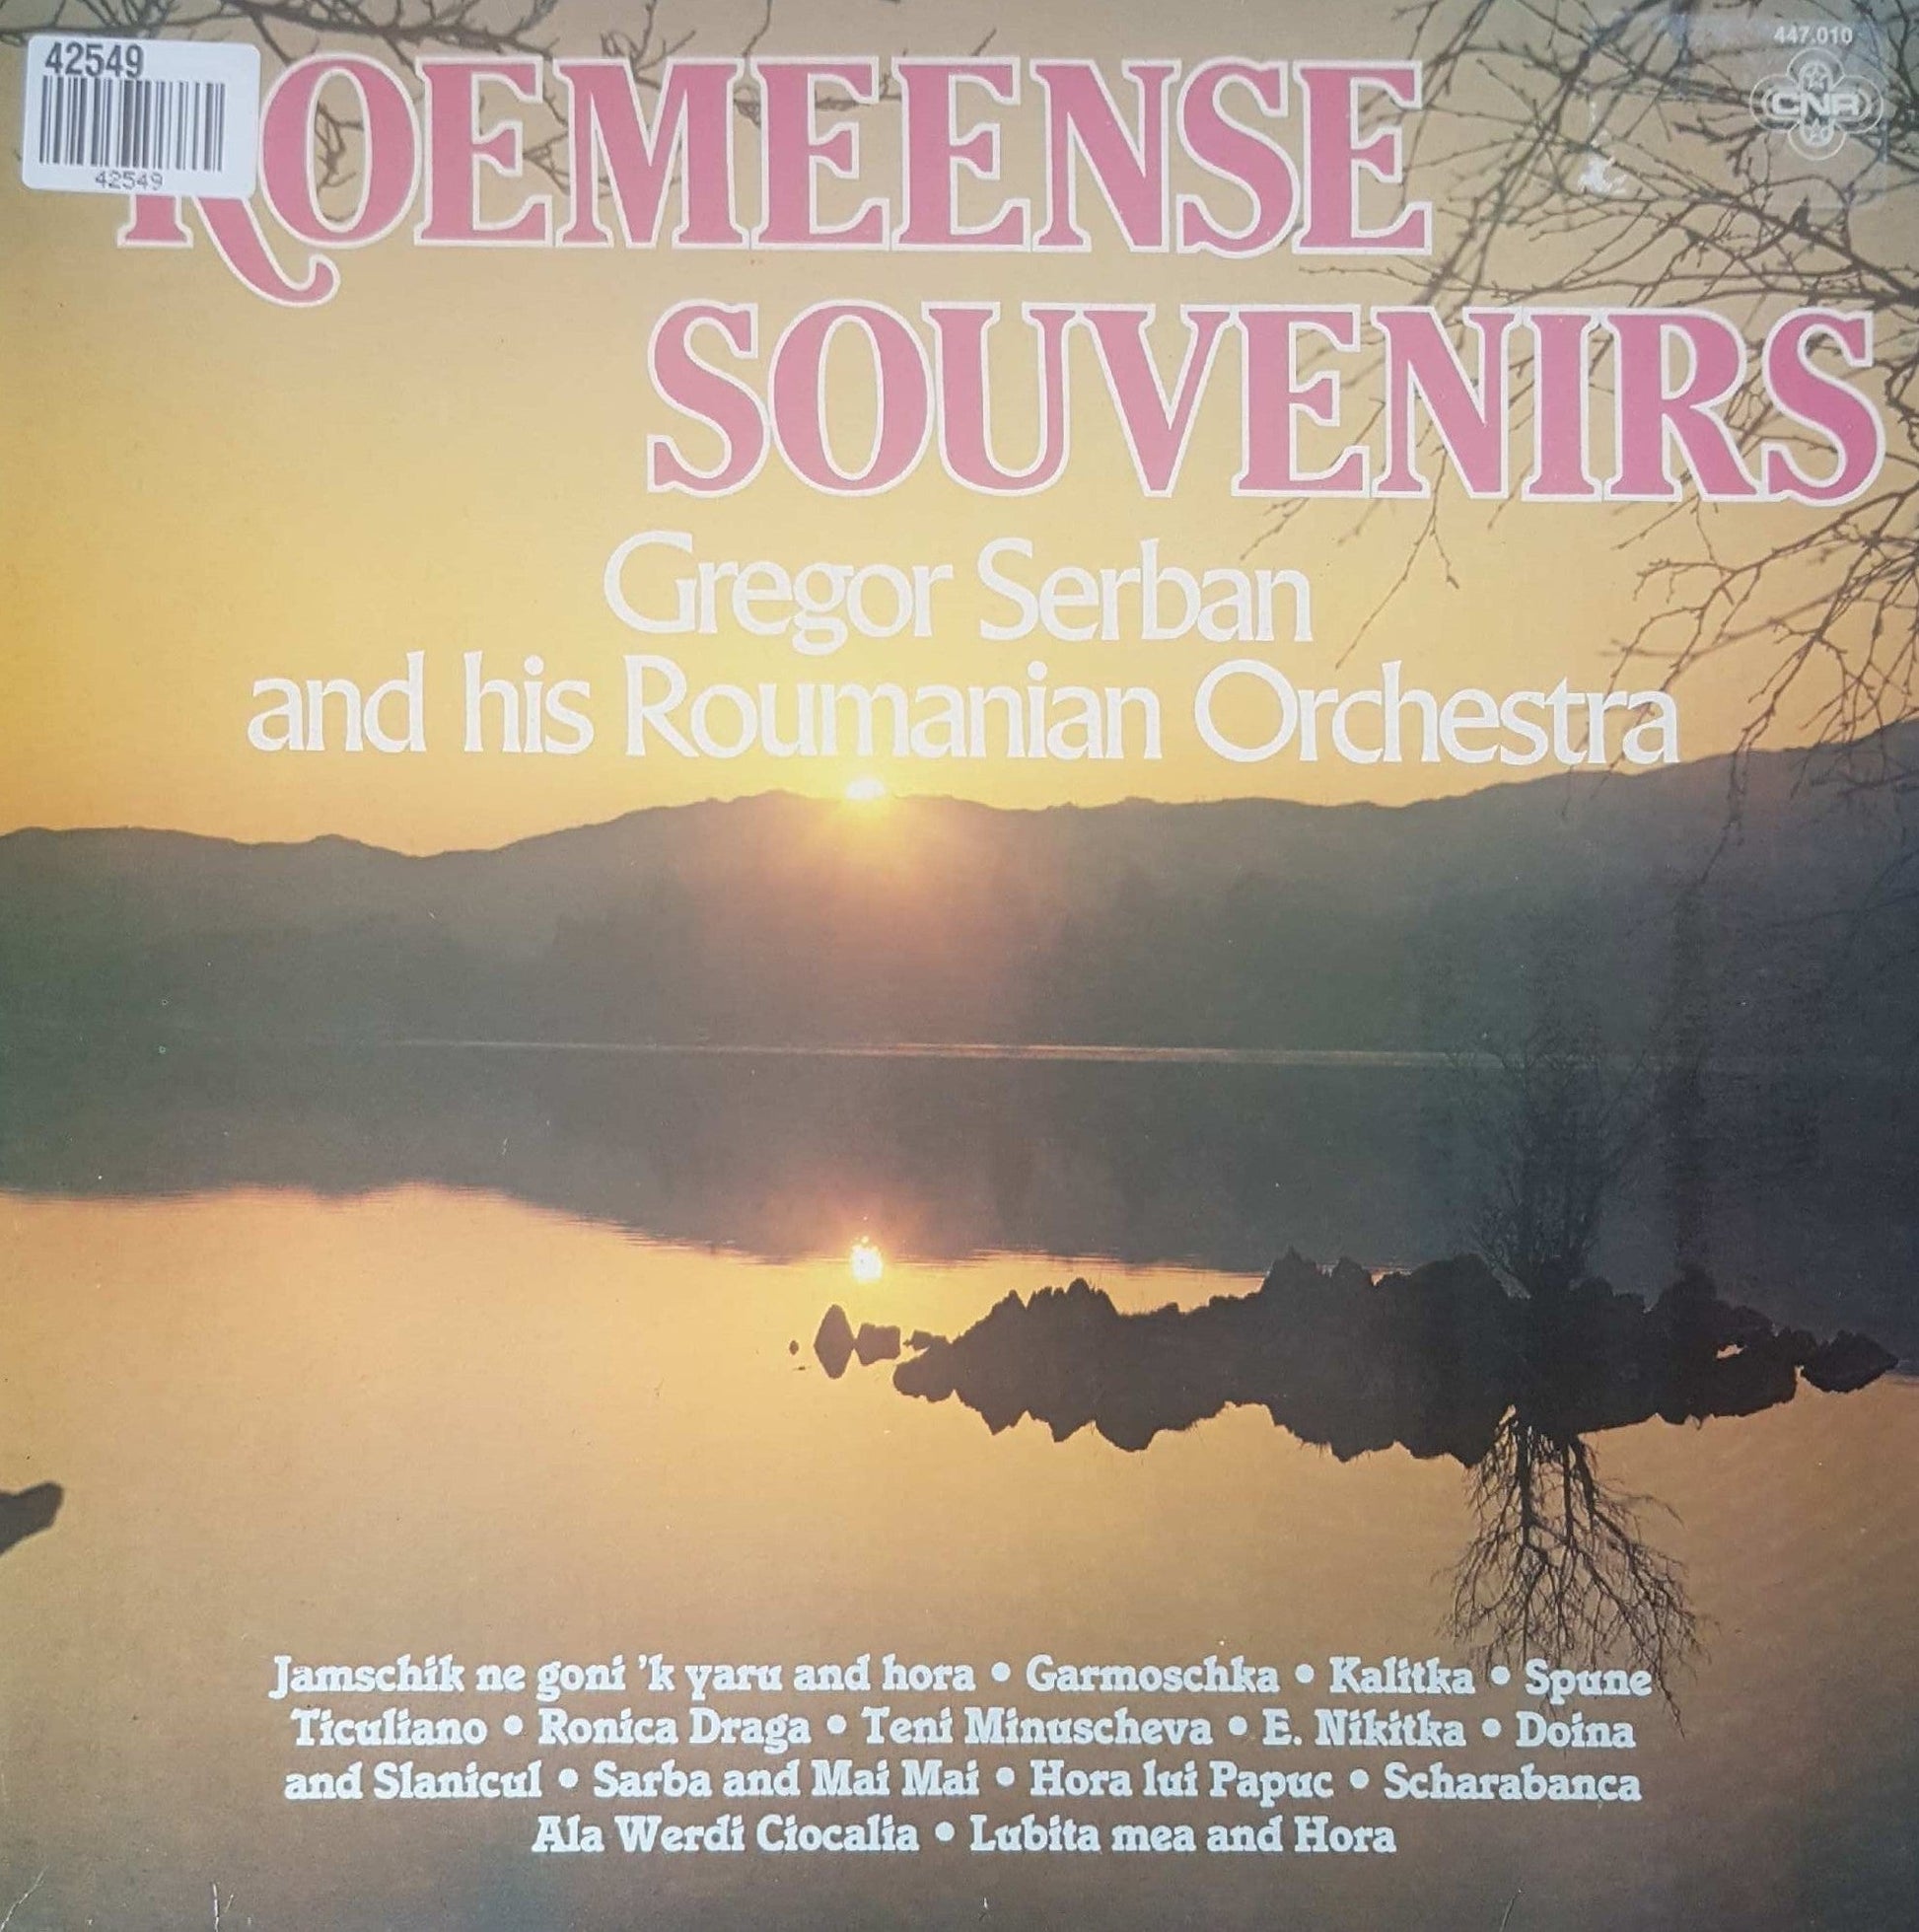 Gregor Serban - Roemeense Souvenirs (LP) 42549 Vinyl LP Goede Staat   